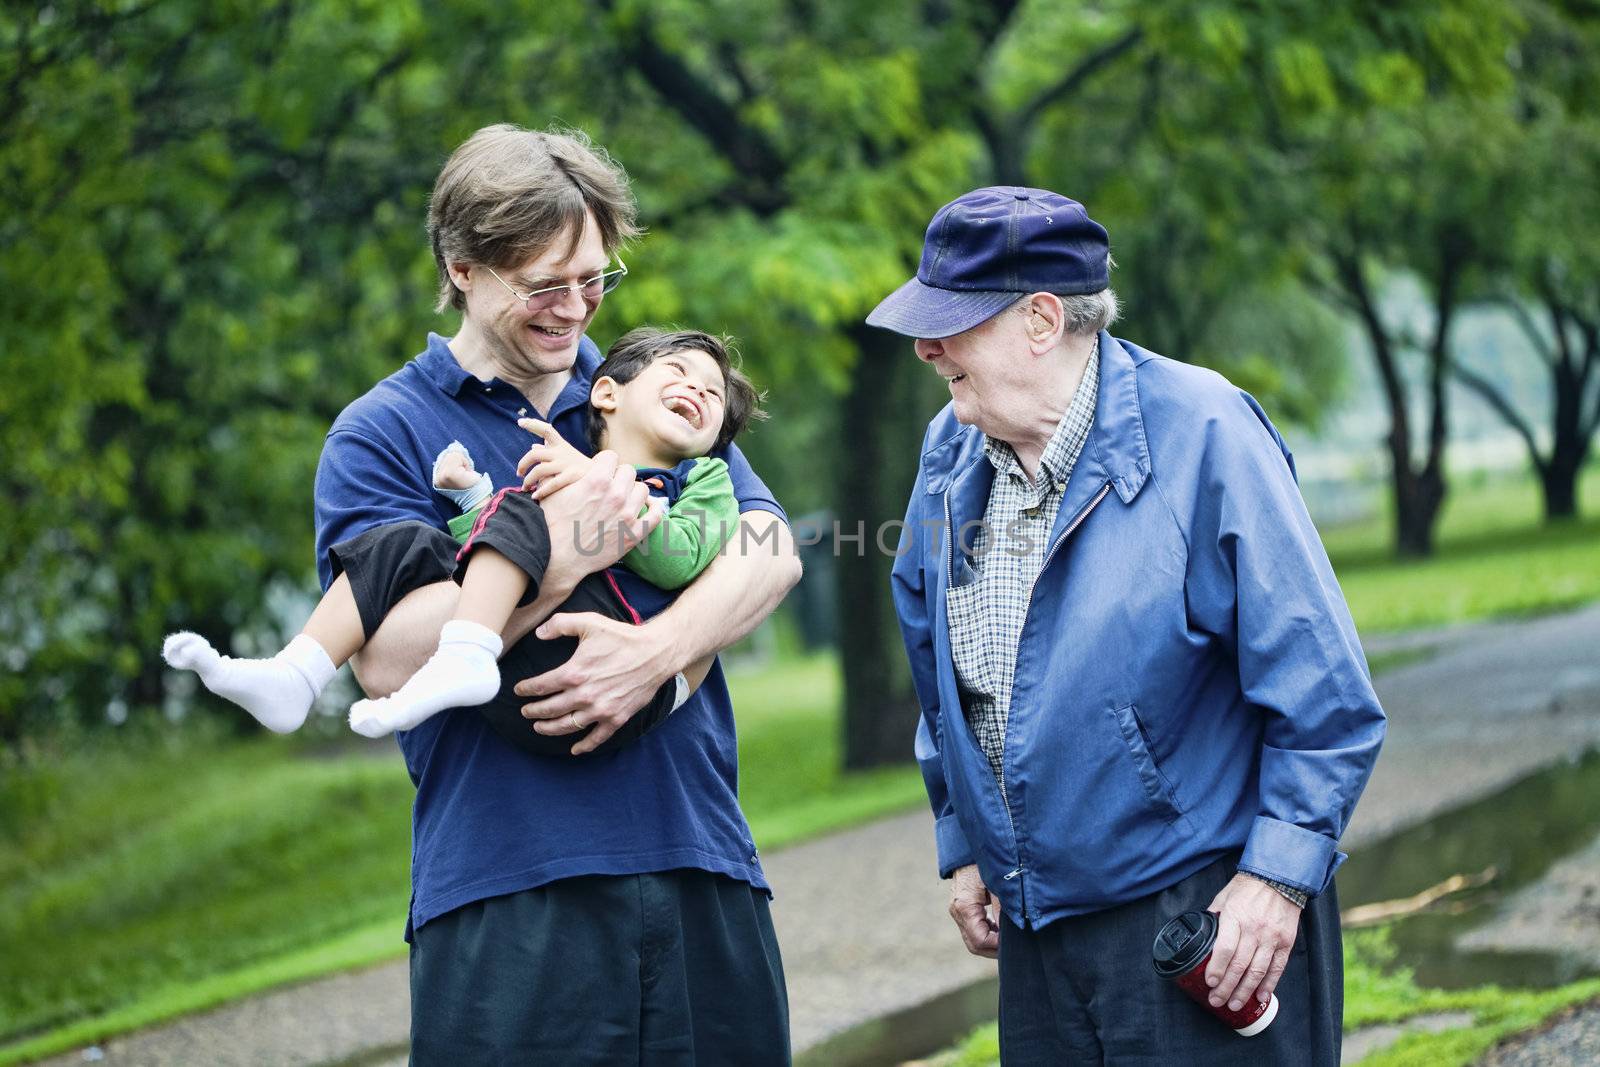 Three generations interacting together by jarenwicklund